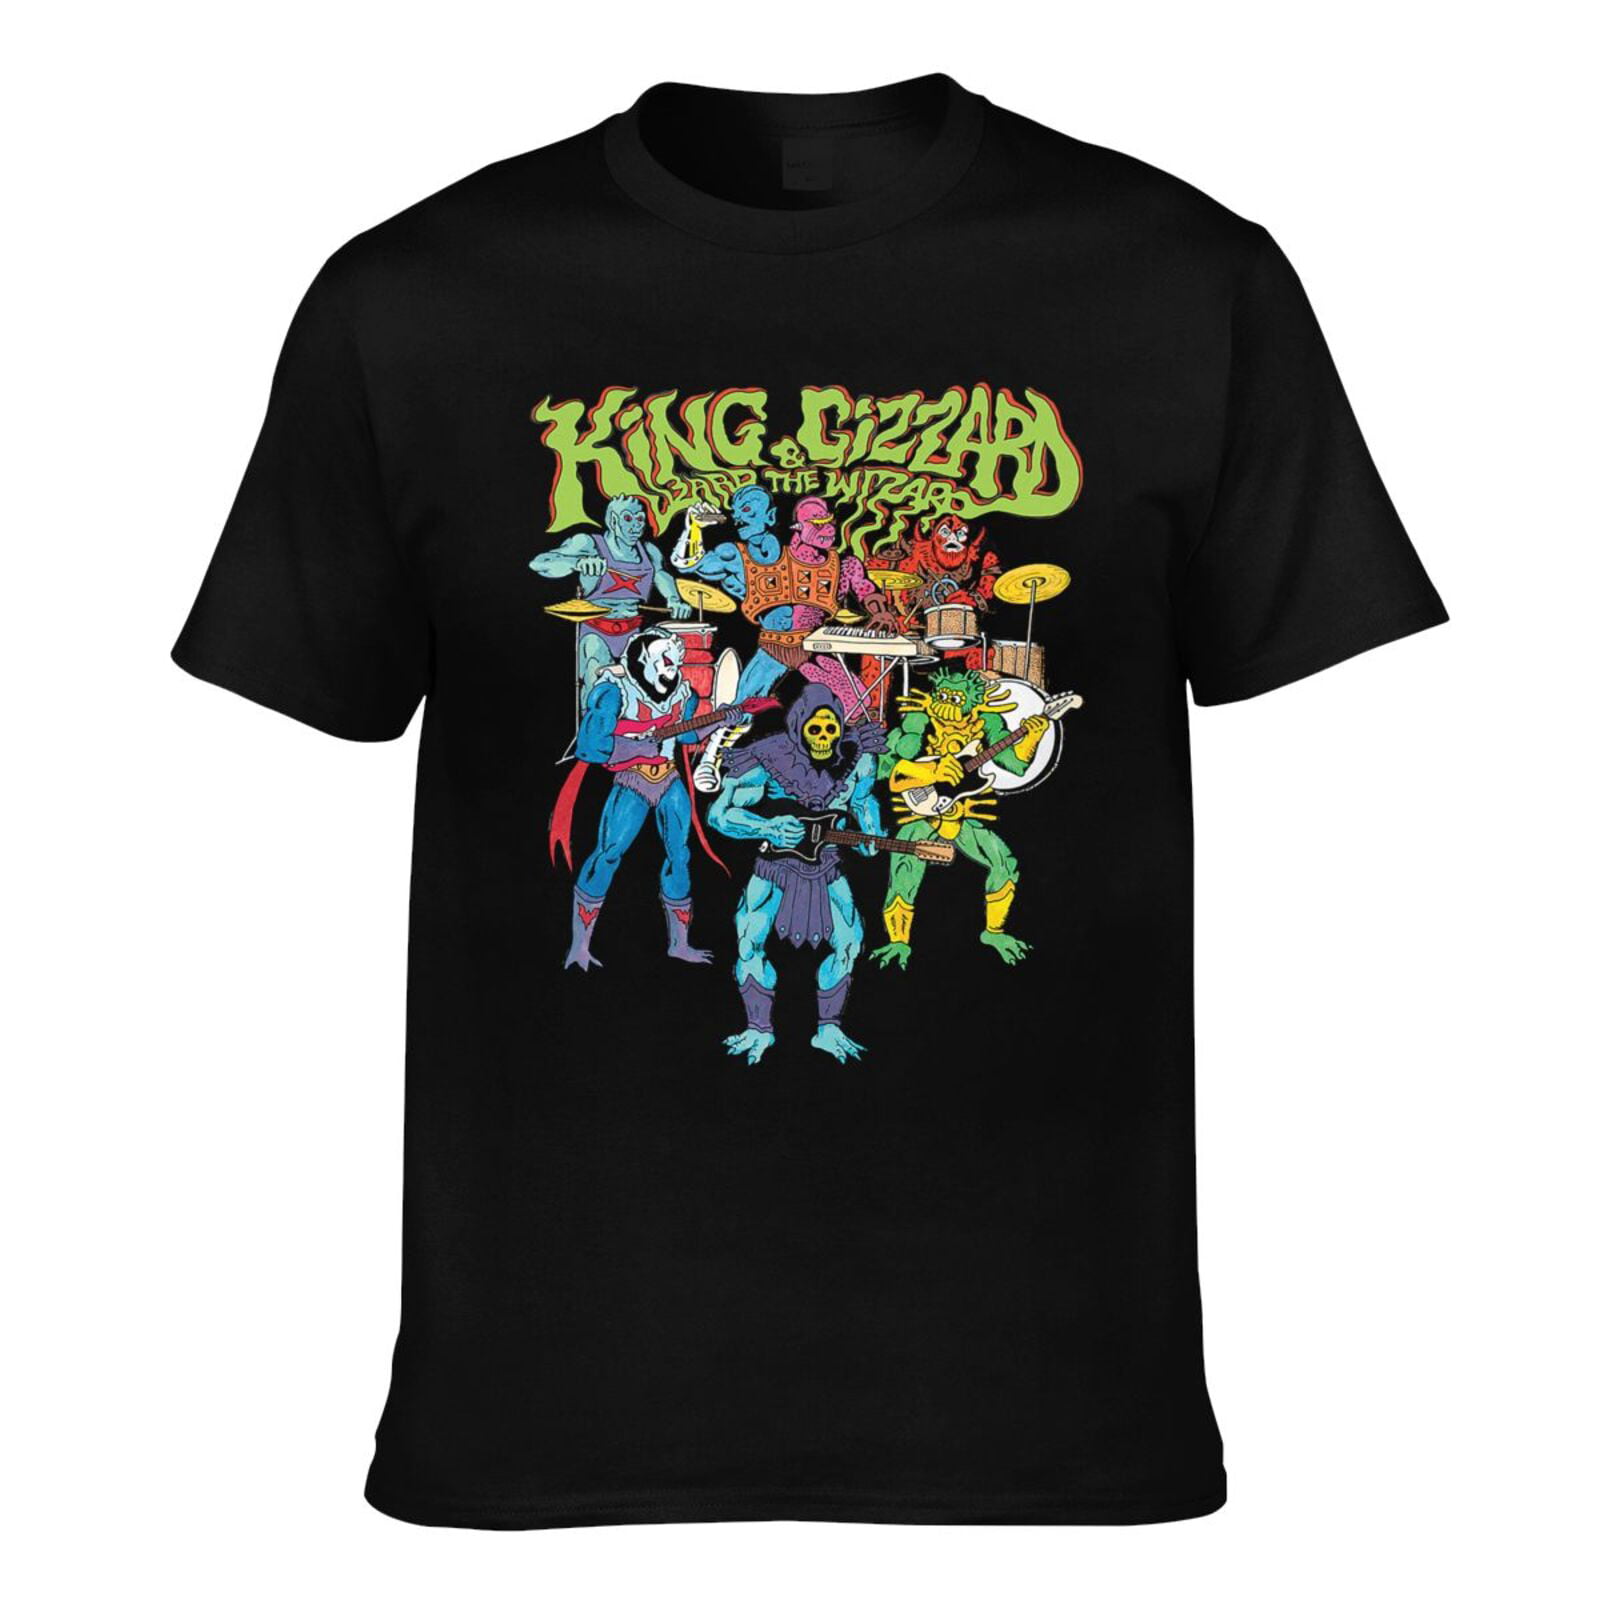 Men'S King Gizzard And Lizard Wizard Official T Shirt Cotton Fashion Casual Neck Short Tees X-Large Black - Walmart.com